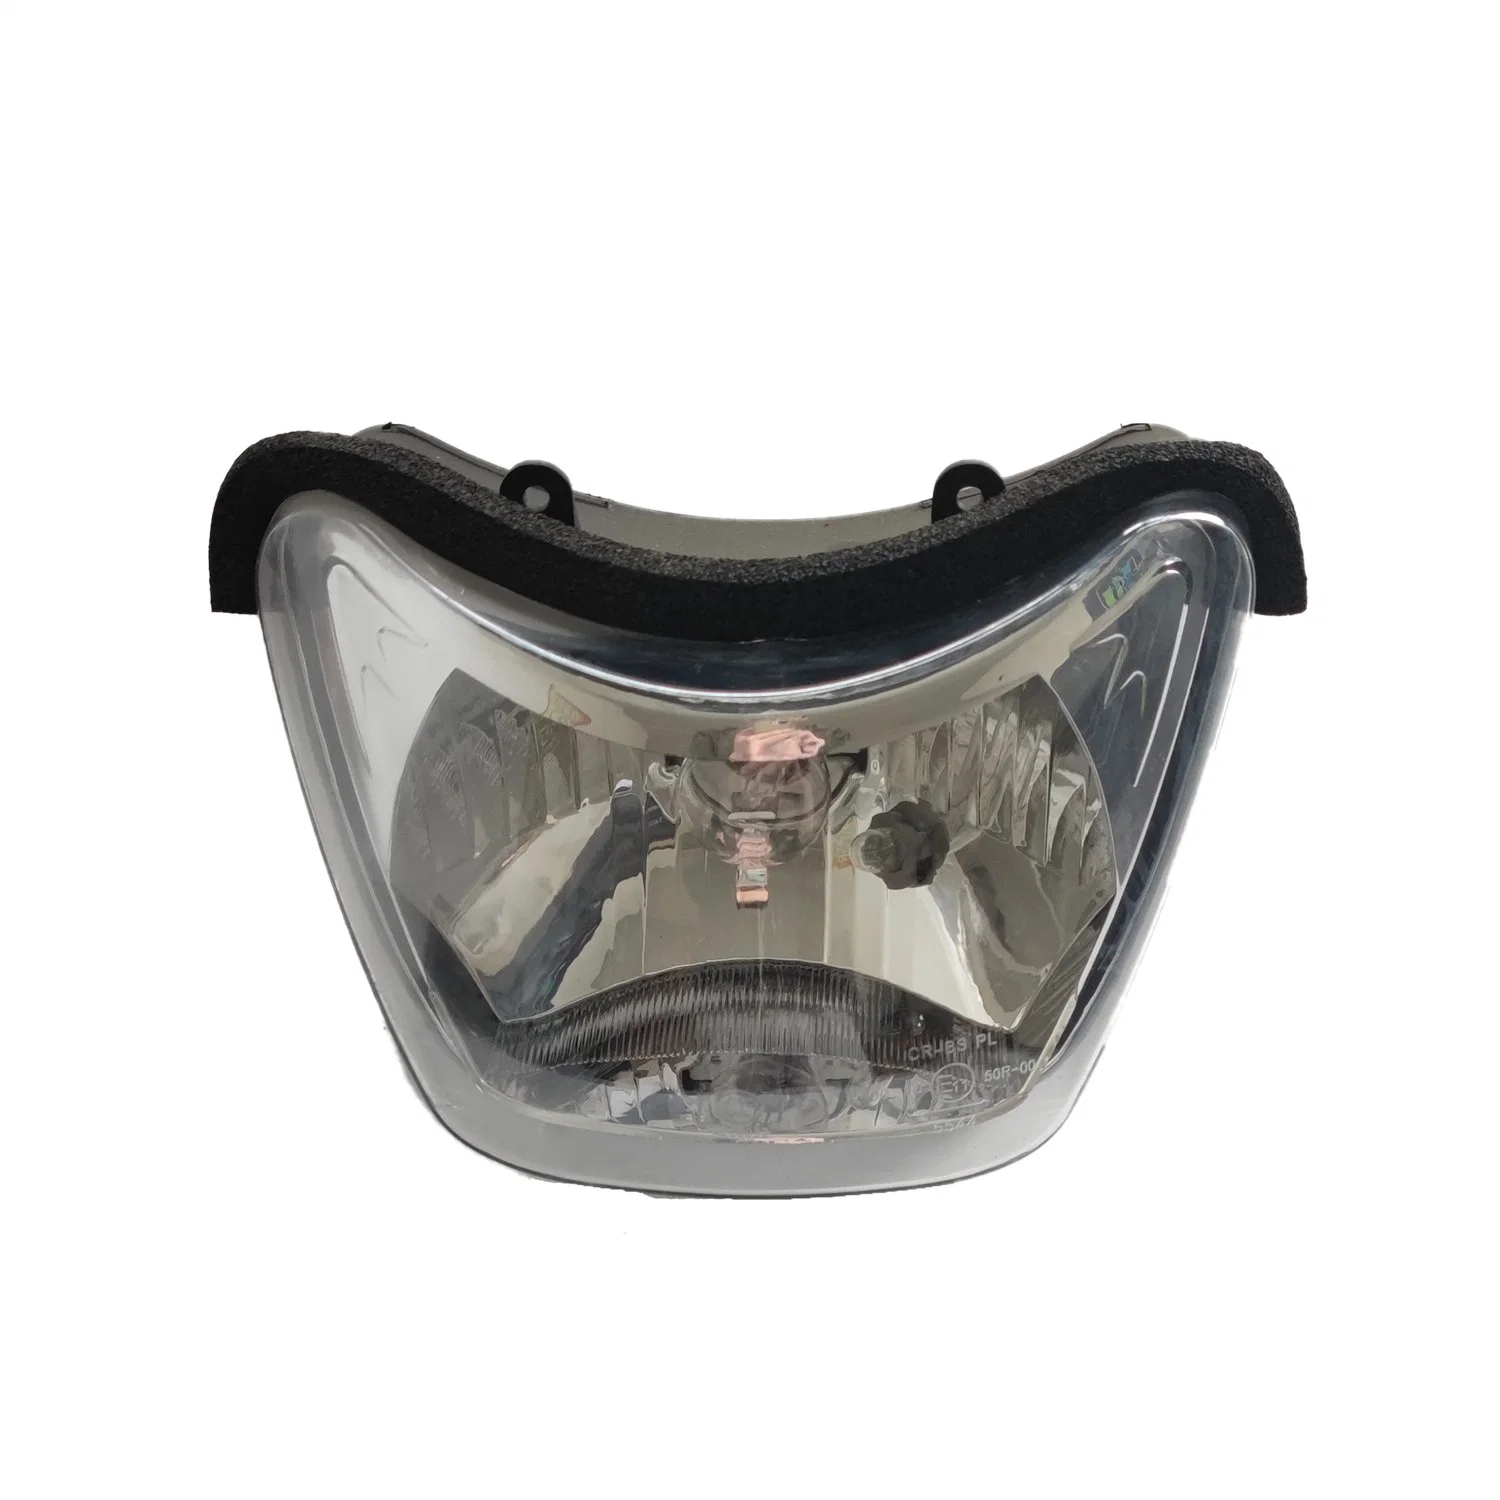 Hongyi Motorcycle Spare Parts Motorcycle Headlight, Motorcycle Headlamp with BMC Reflector